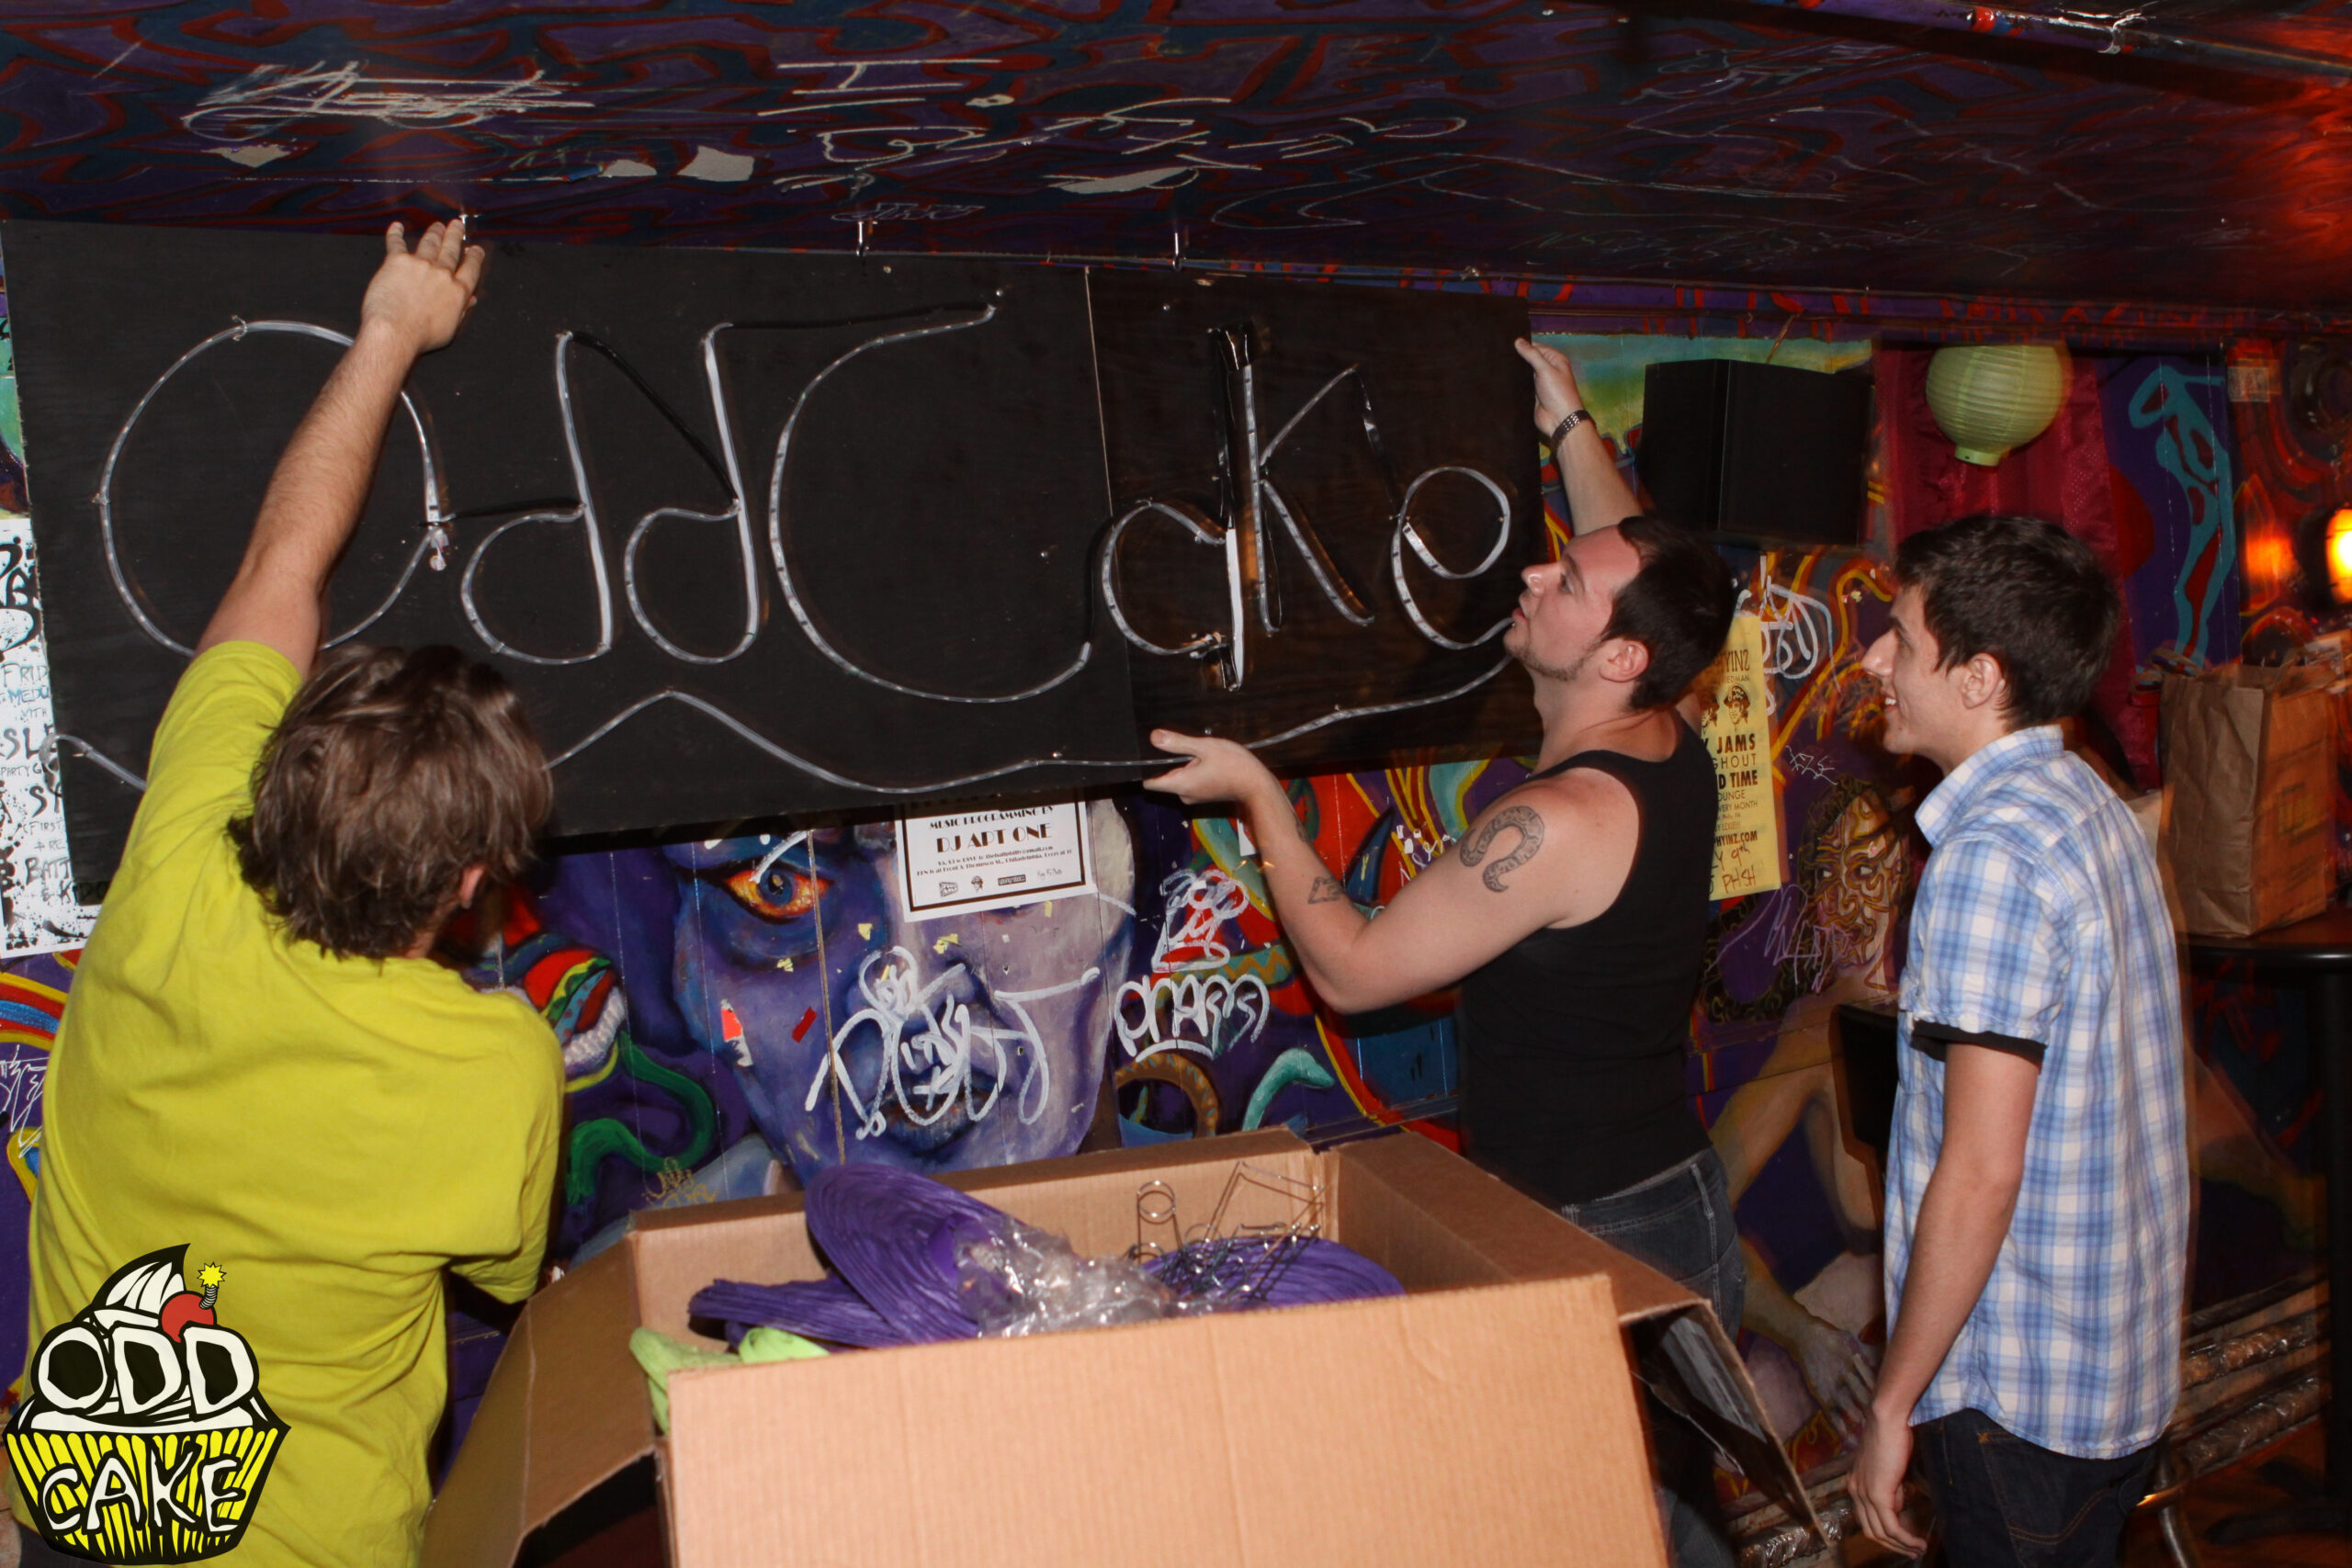 Img 0769 Oddcake Presents Digital Meltdown 07 21 2011 Medusa Lounge Philadelphia Pa Burning Man Rave Party Scaled, OddCake